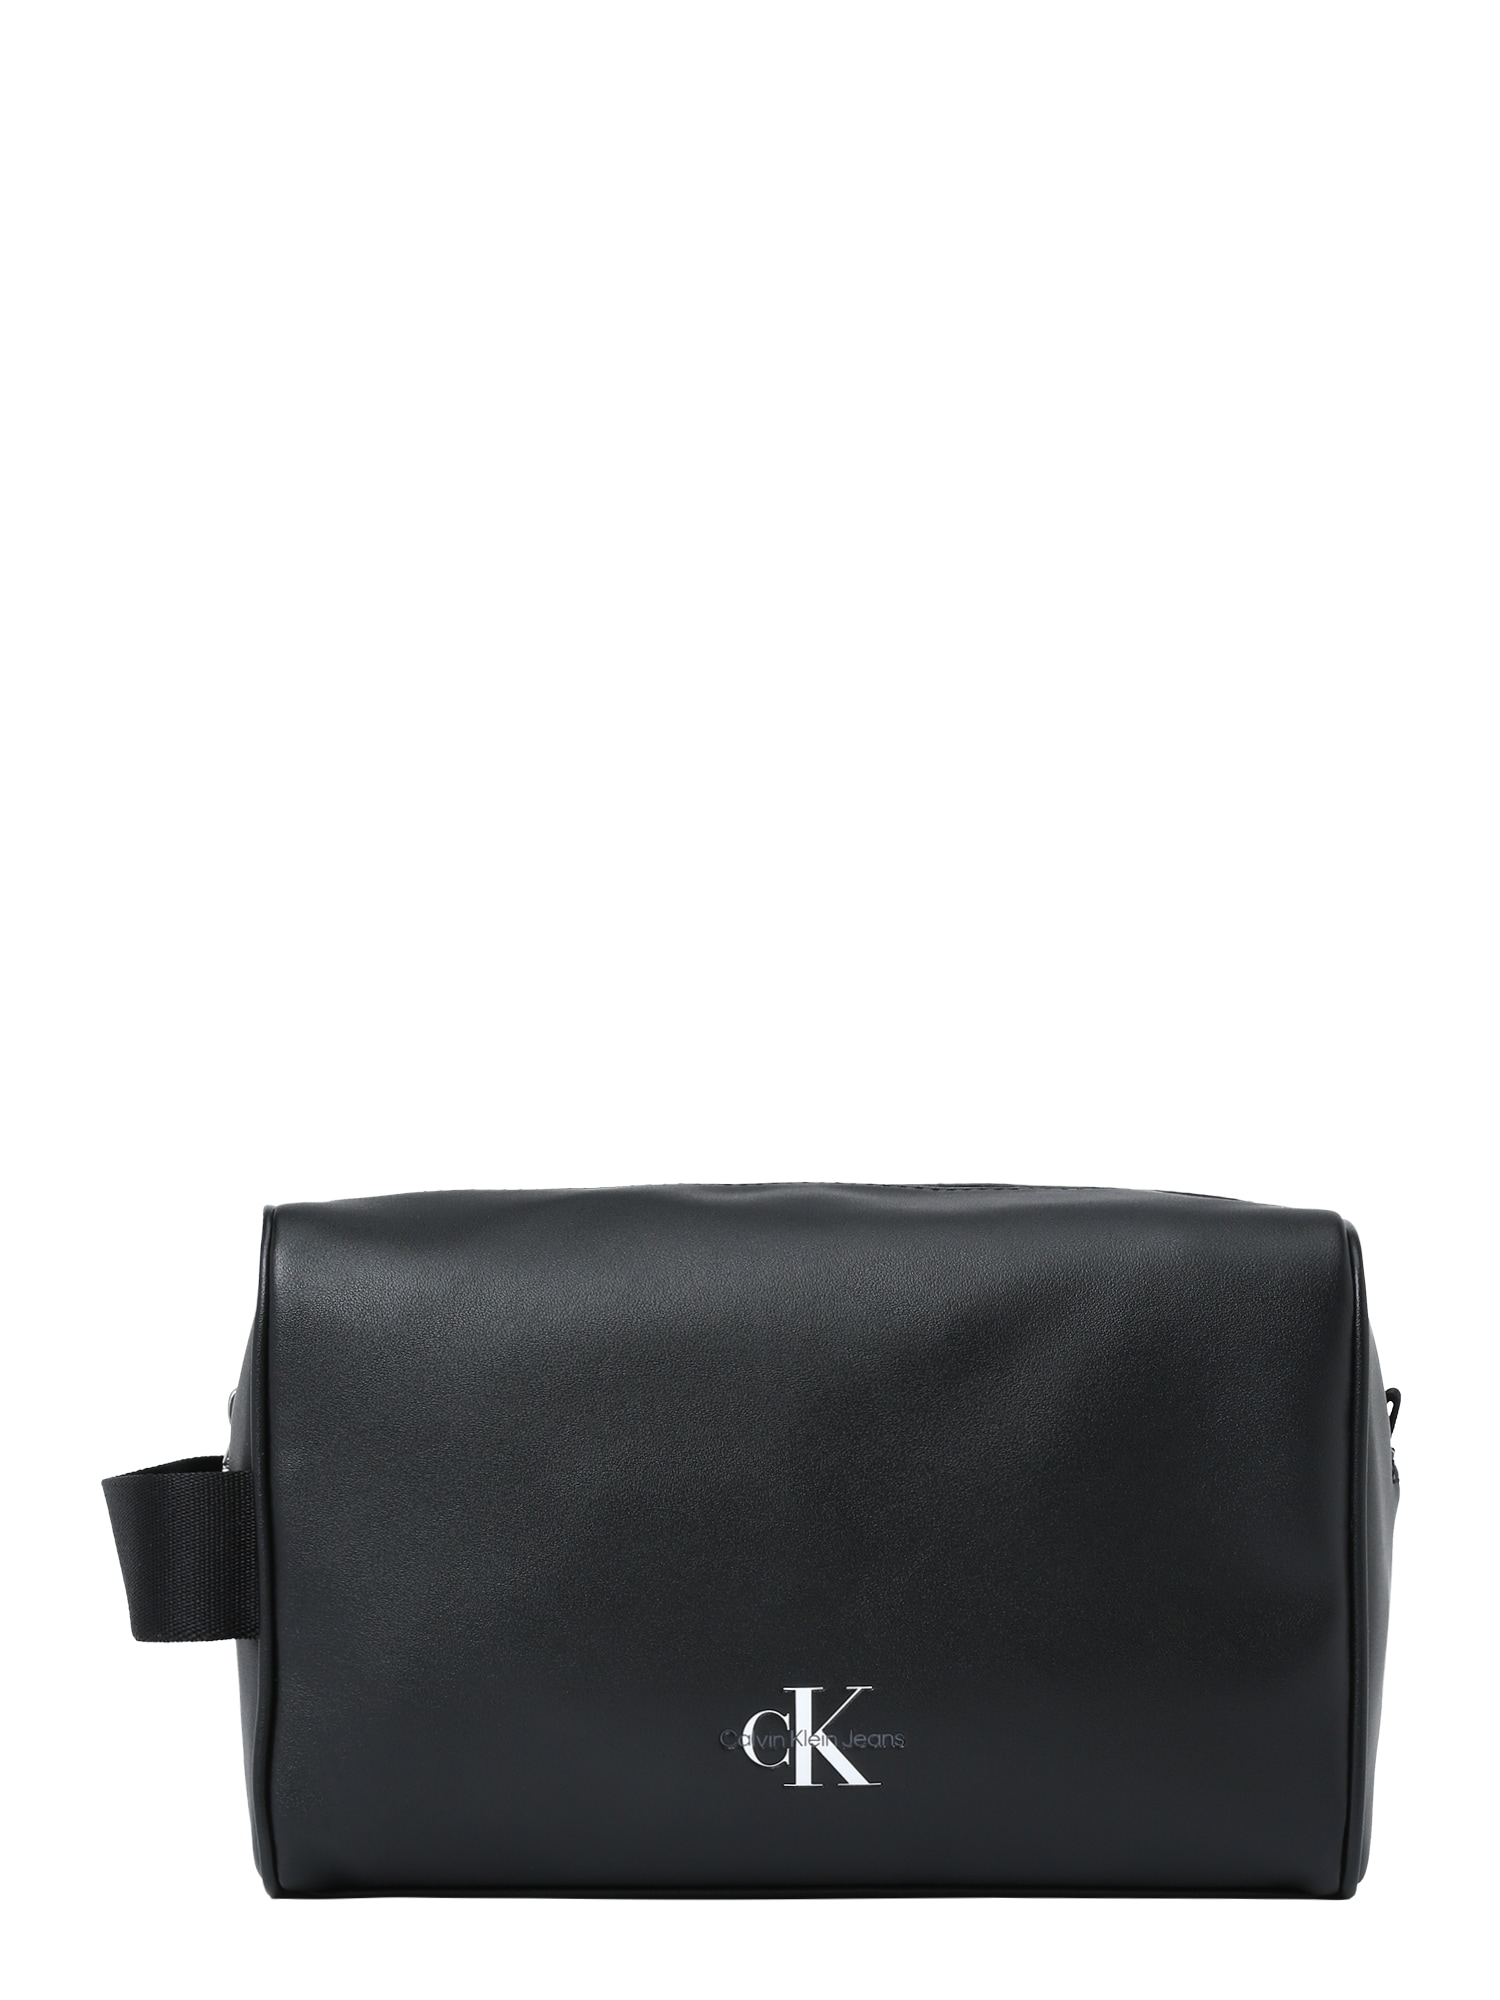 Calvin Klein Jeans Tualeto reikmenų / kosmetikos krepšys grafito / juoda / balta